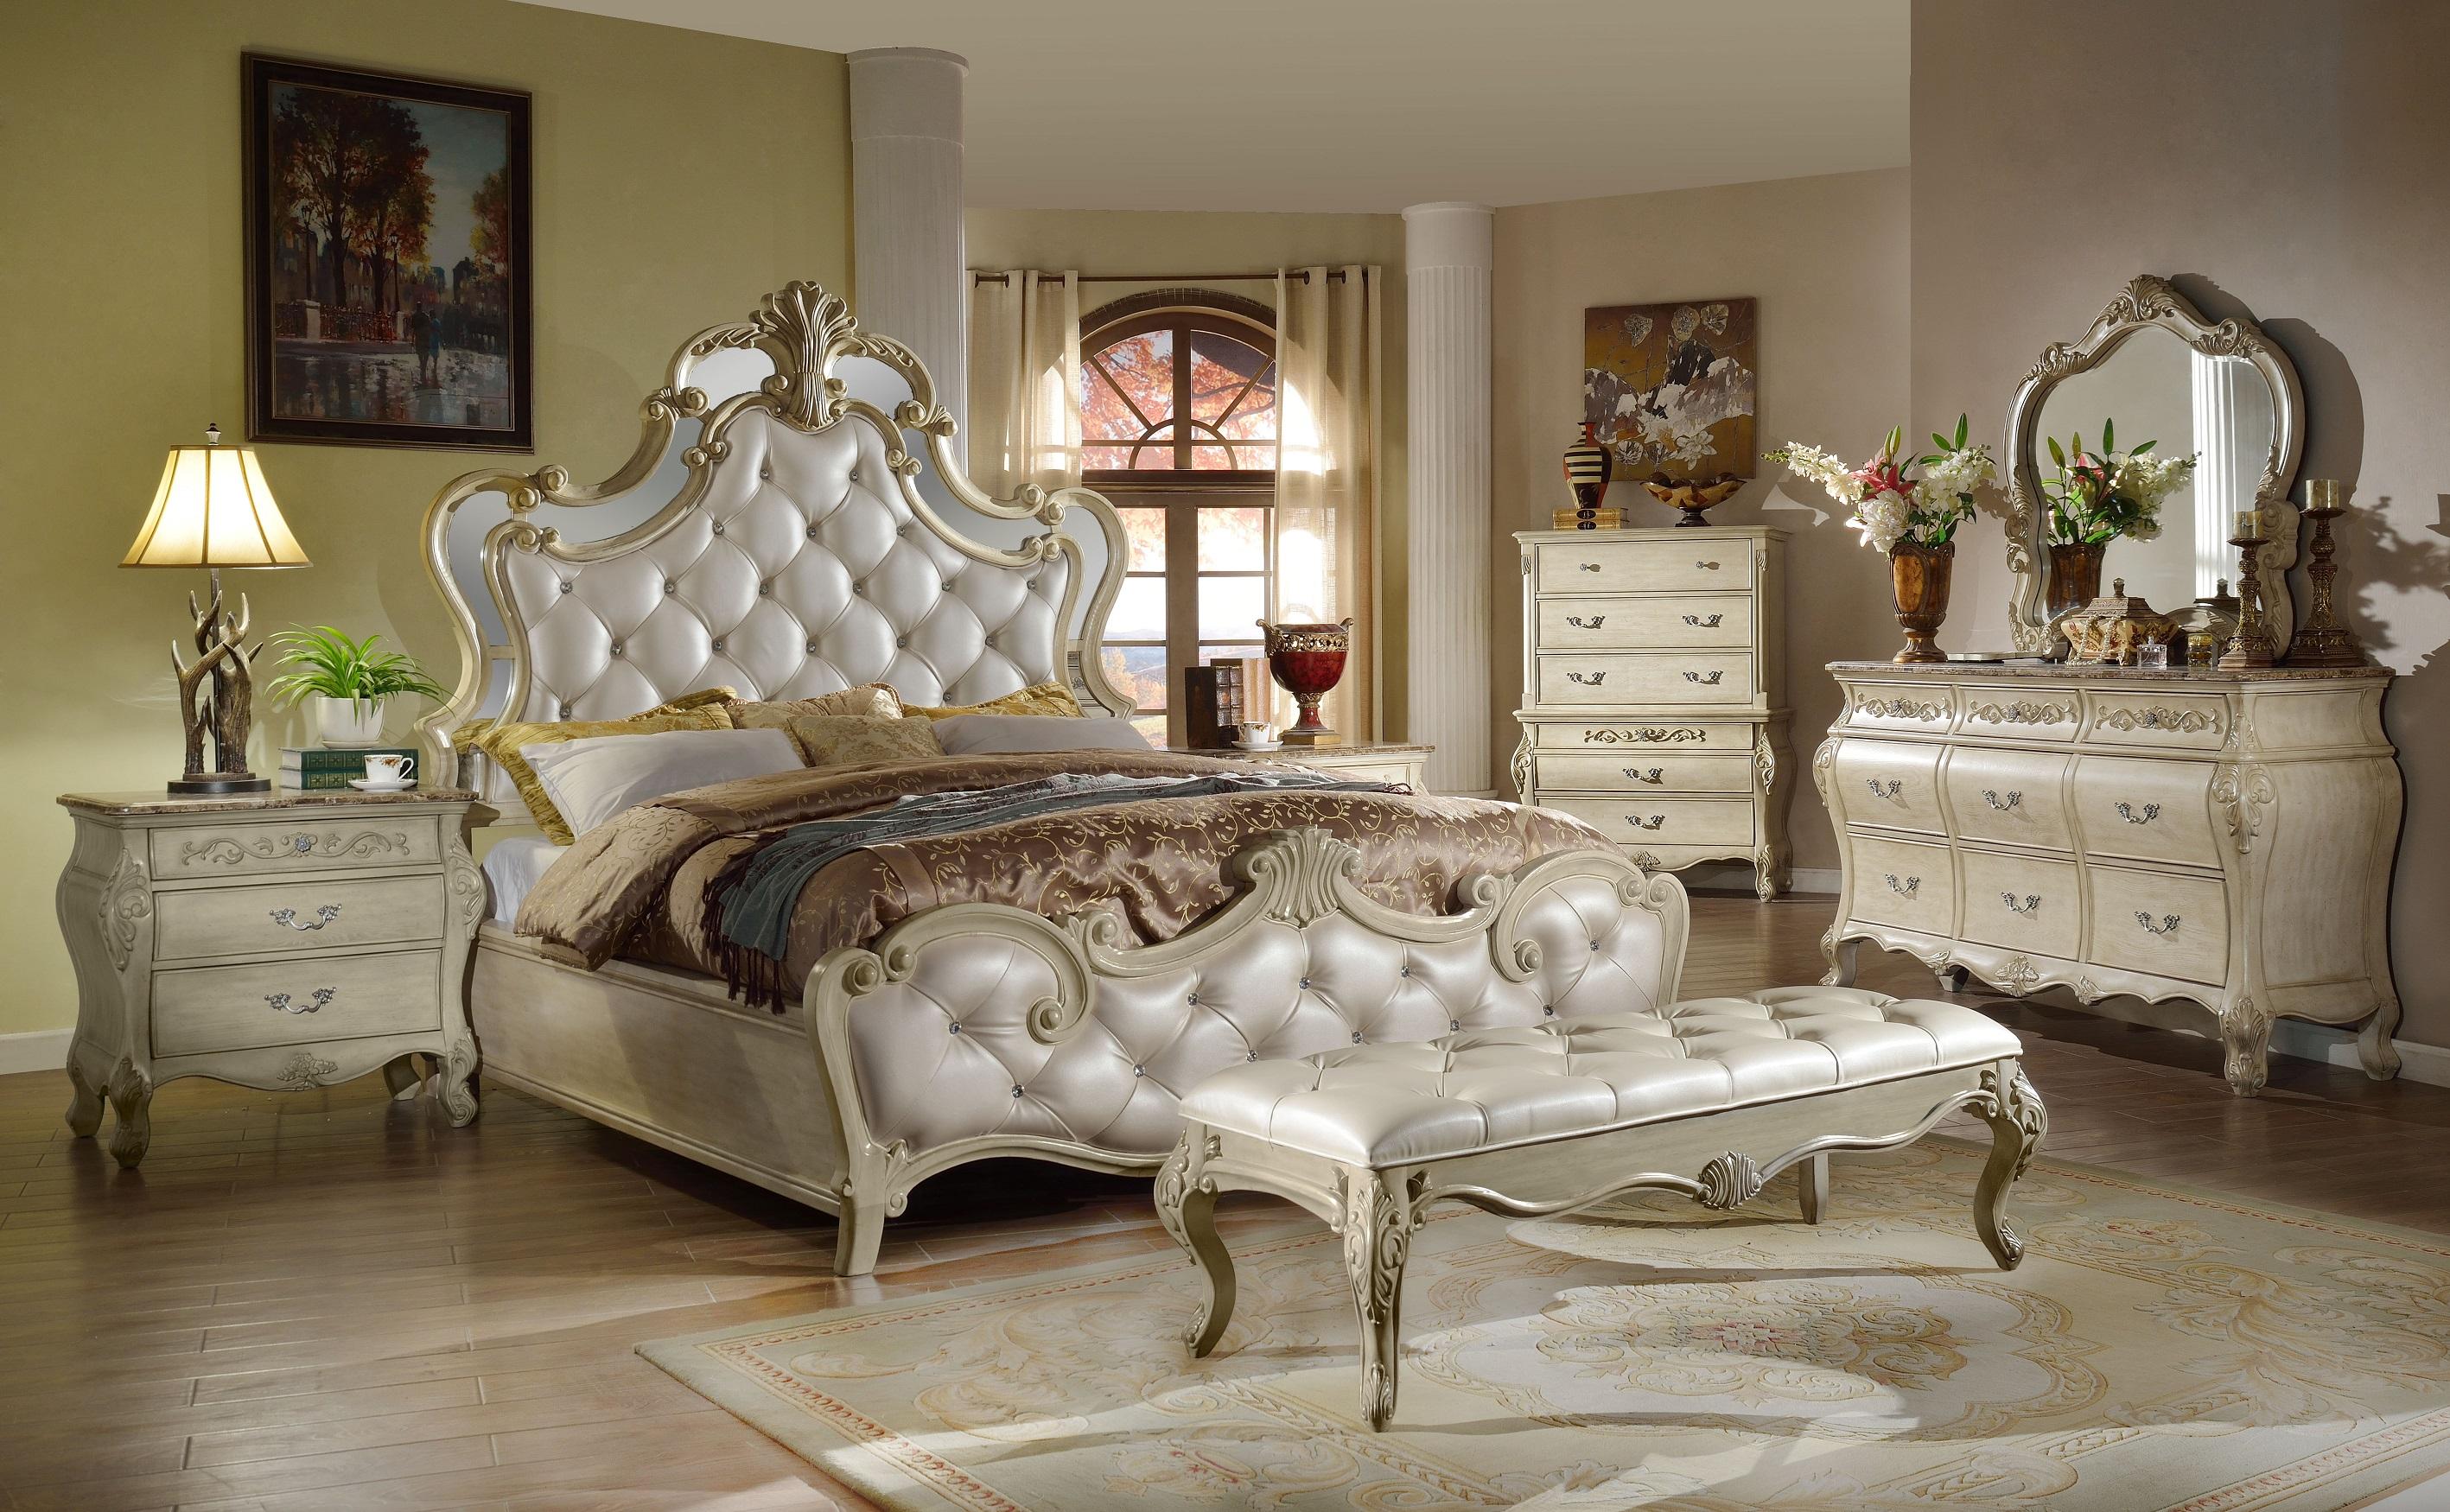 

    
McFerran B8305 Antique White Glamour Crystal Tufted Fabric California King Bedroom Set 7 Pcs
